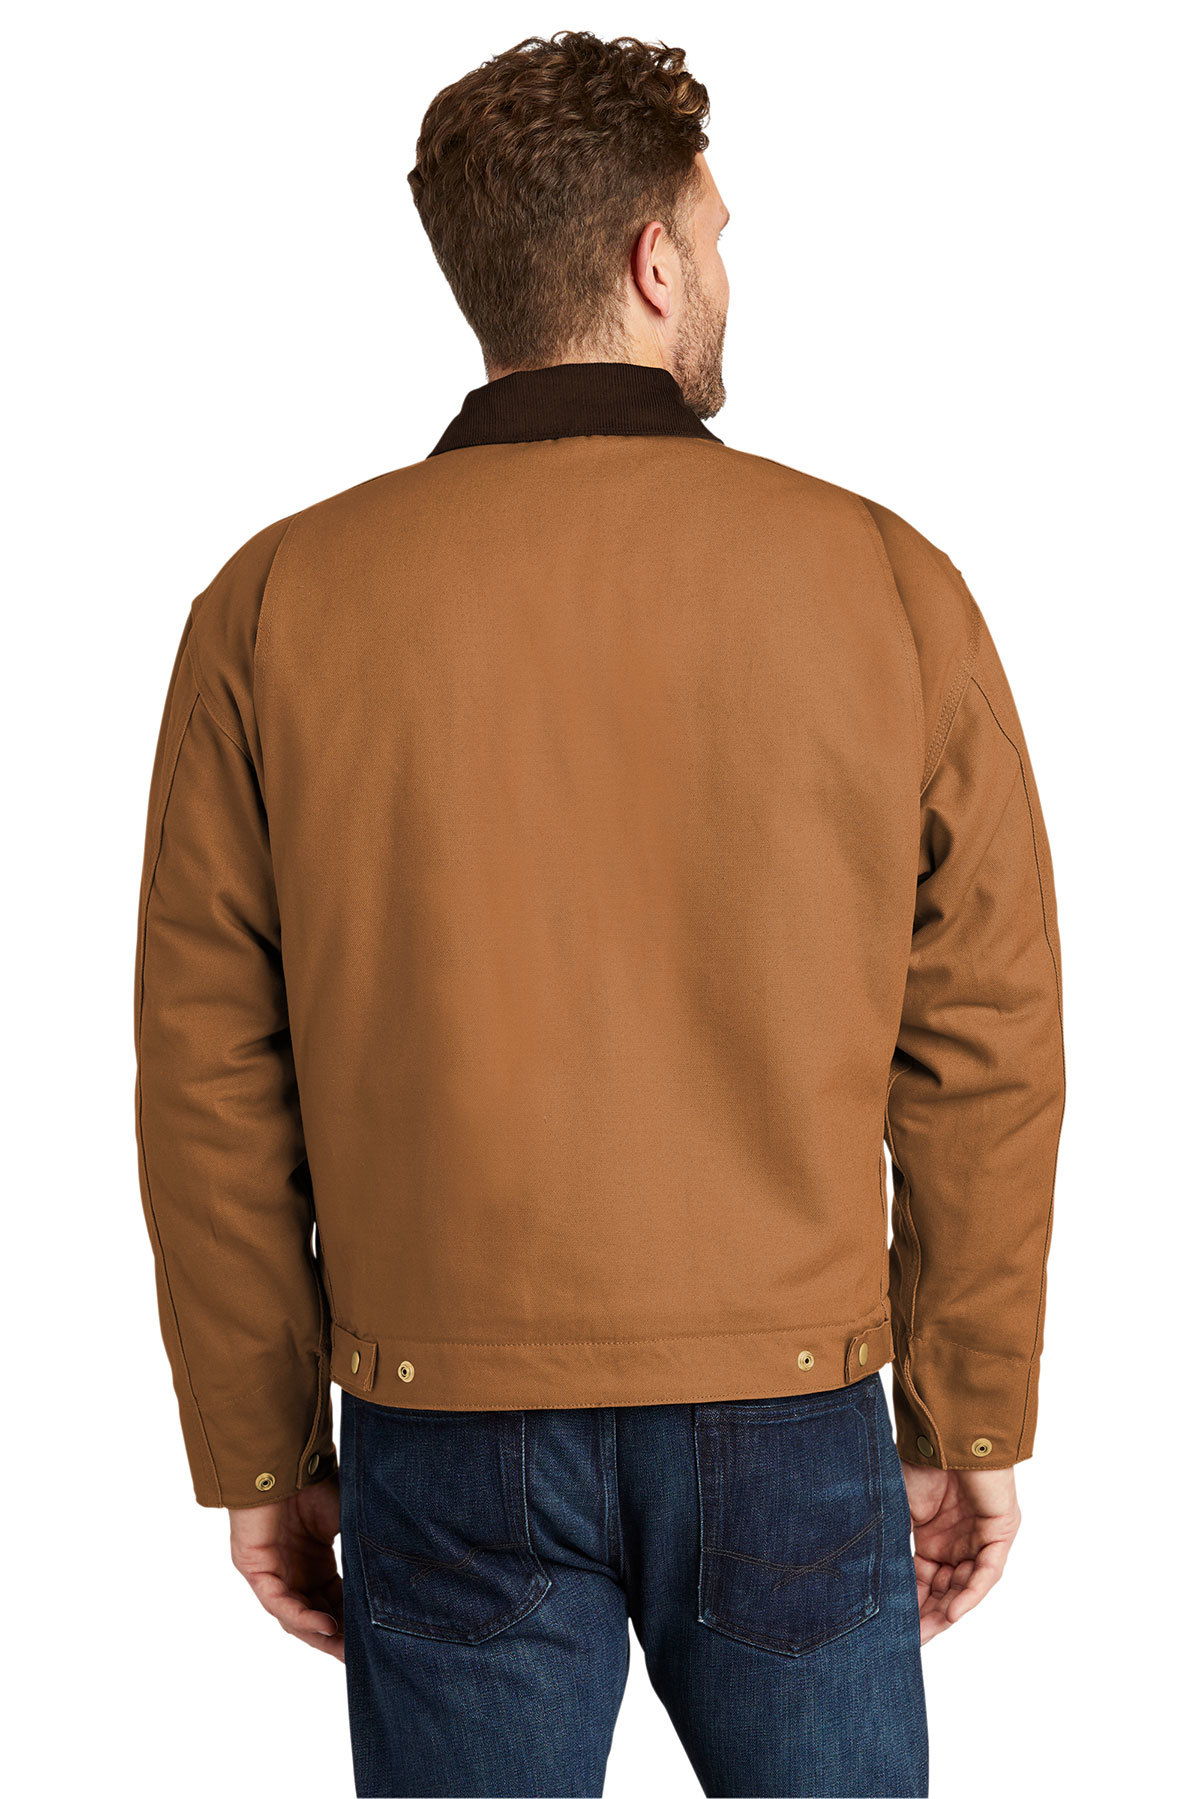 CornerStone - Duck Cloth Work Jacket | Product | CornerStone